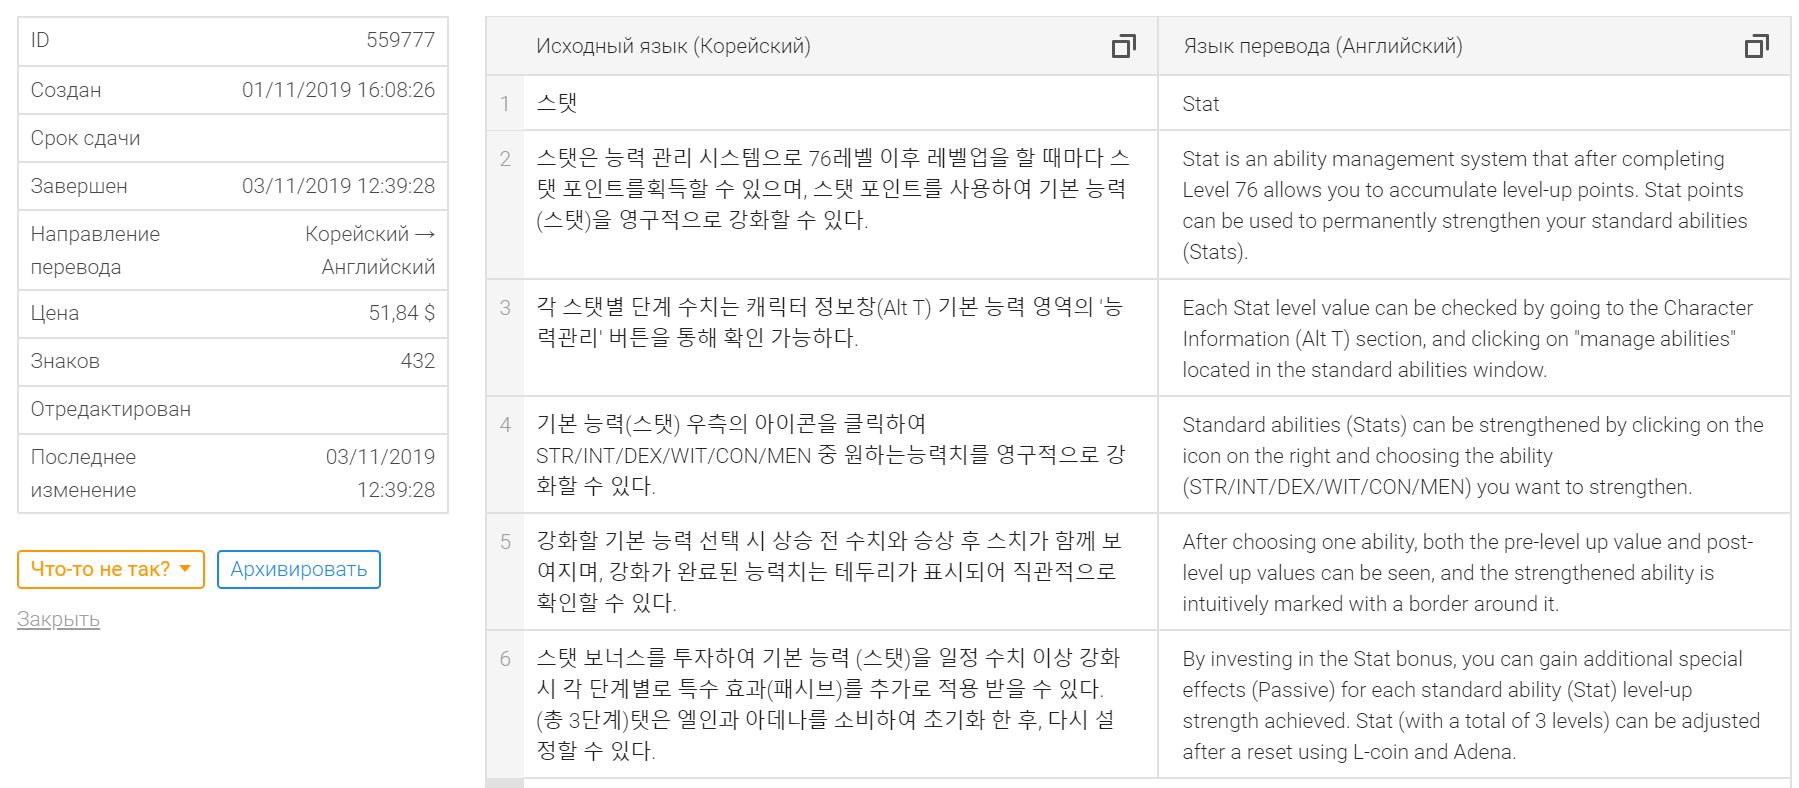 Перевод в онлайн-сервисе Nitro с корейского языка на английский язык кингуру